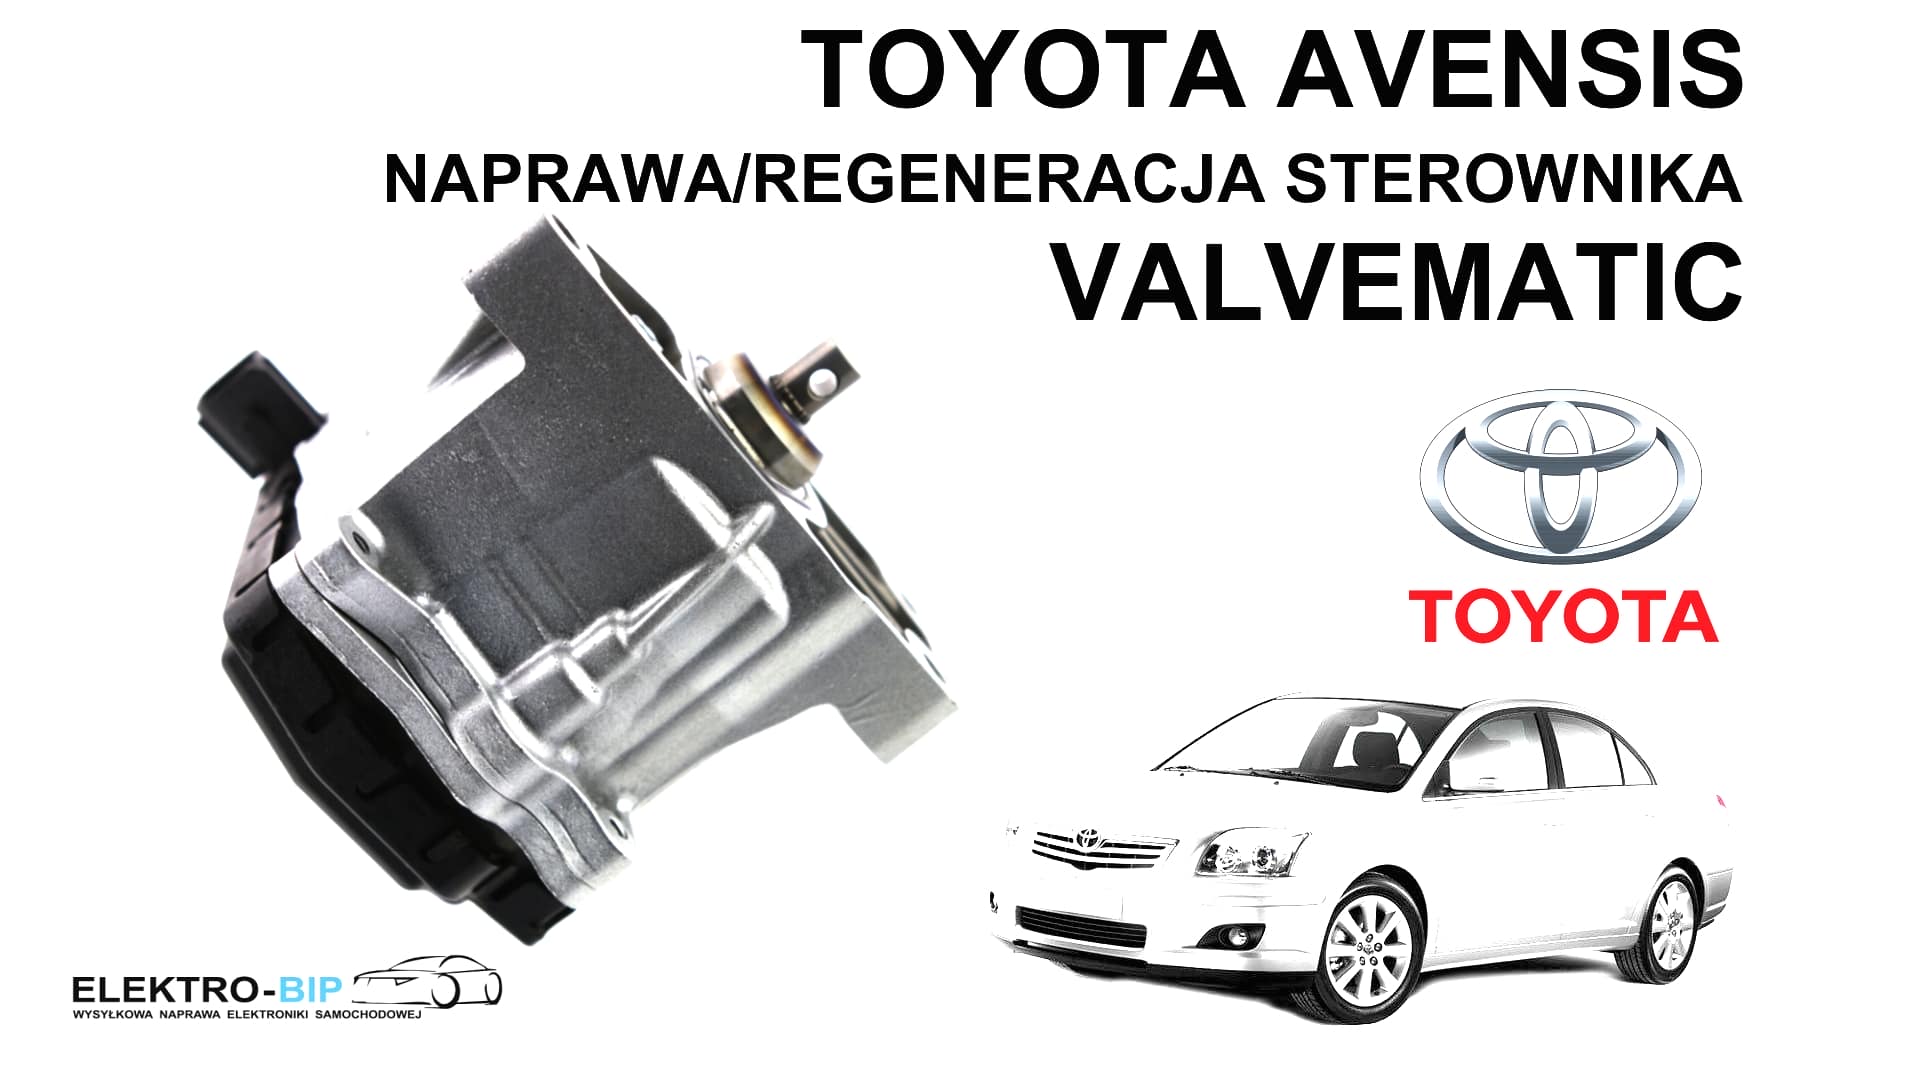 Toyota Avensis, naprawa/regeneracja sterownika Valvematic tagi: Sterownik Valvematic, obok samochód Toyota Avensis, nad nim napis: Toyota Avensis, Naprawa/regeneracja sterownika Valvematic